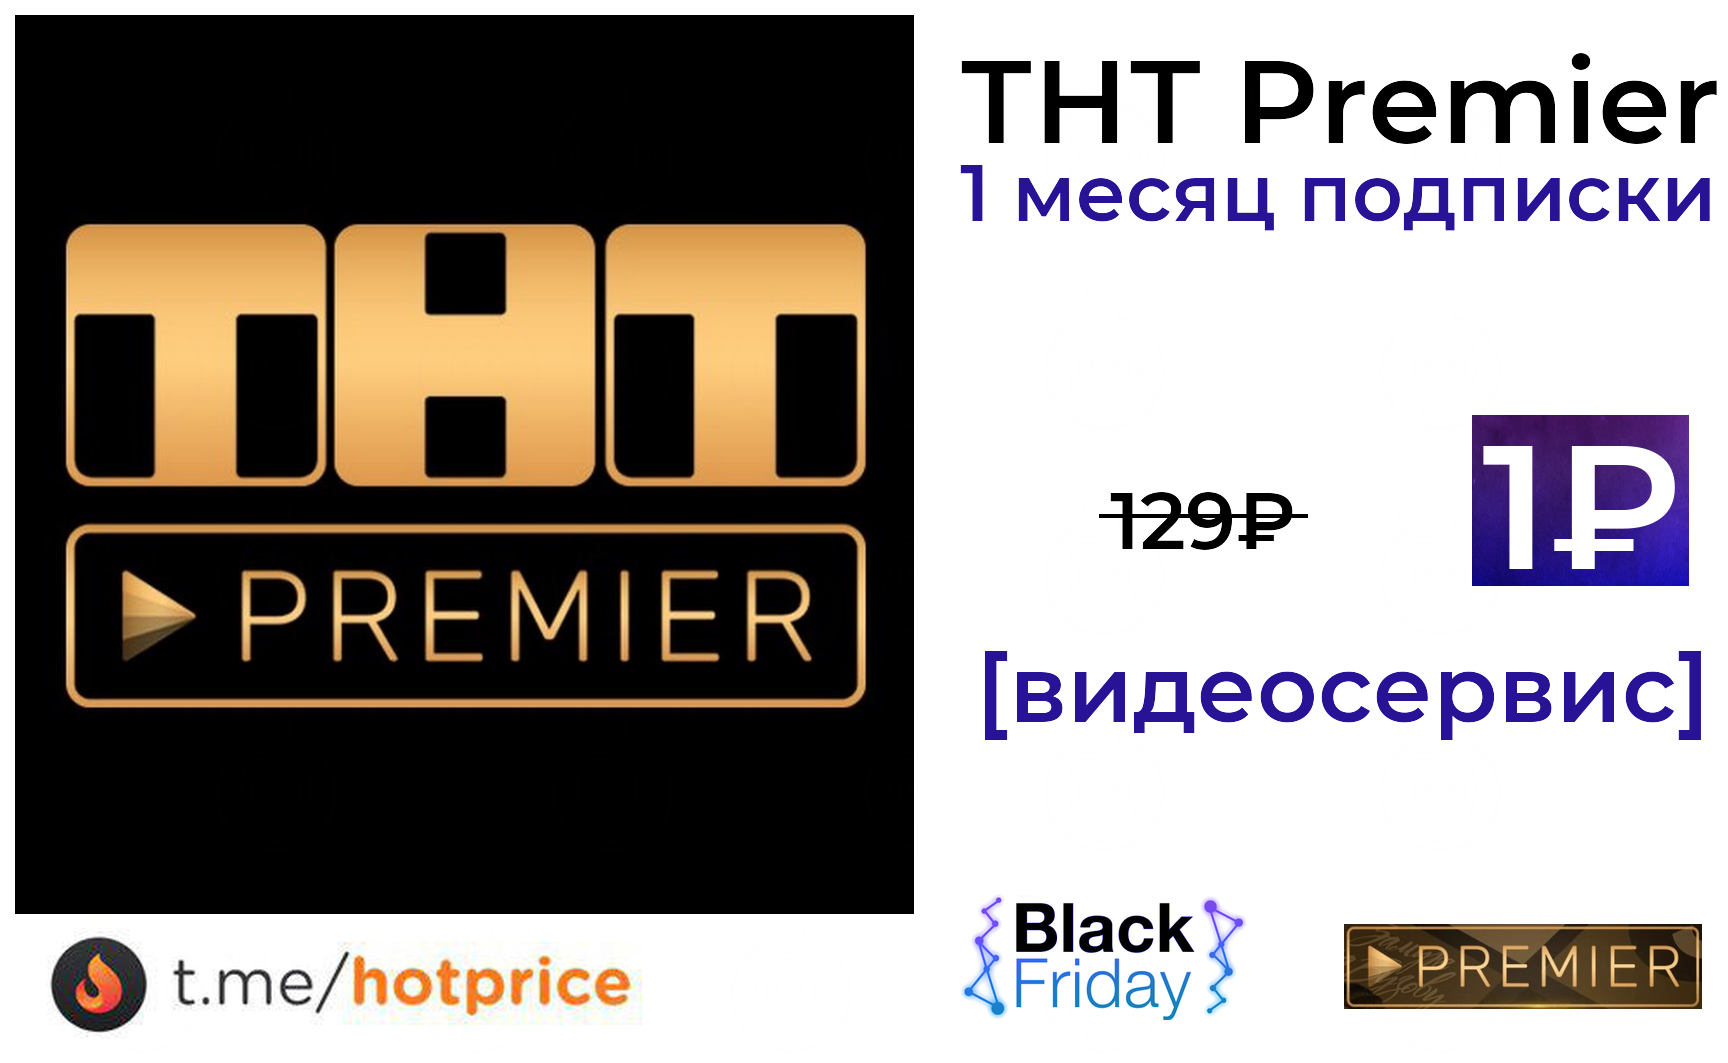 ТНТ Premier. ТНТ Premier логотип. Кинотеатр Premier логотип.